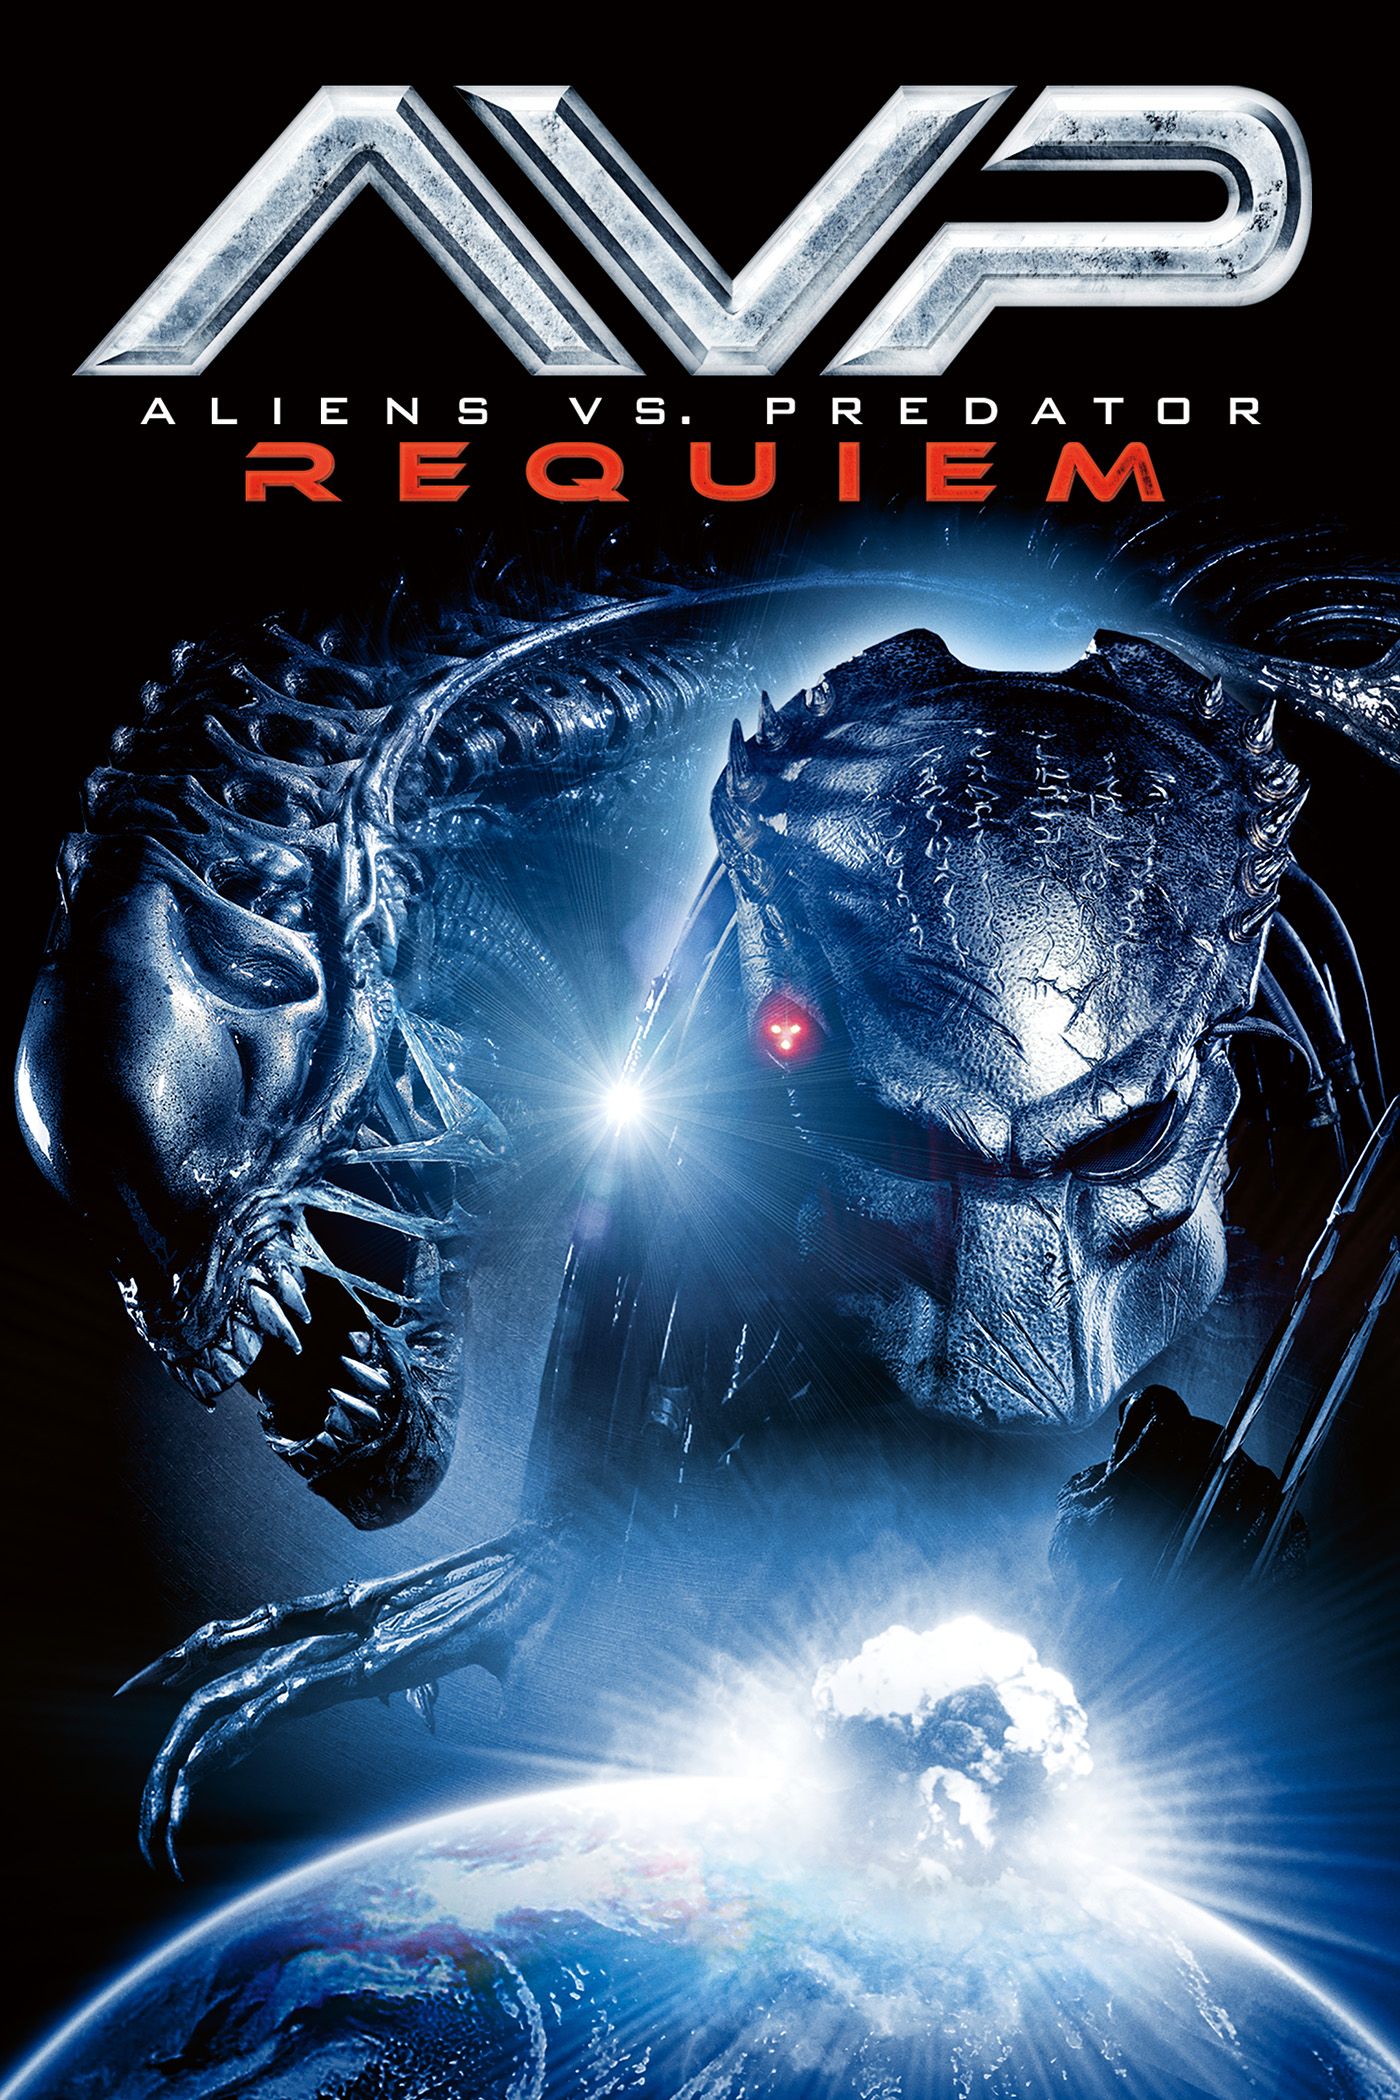 watch alien vs predator 2 online free 123movies